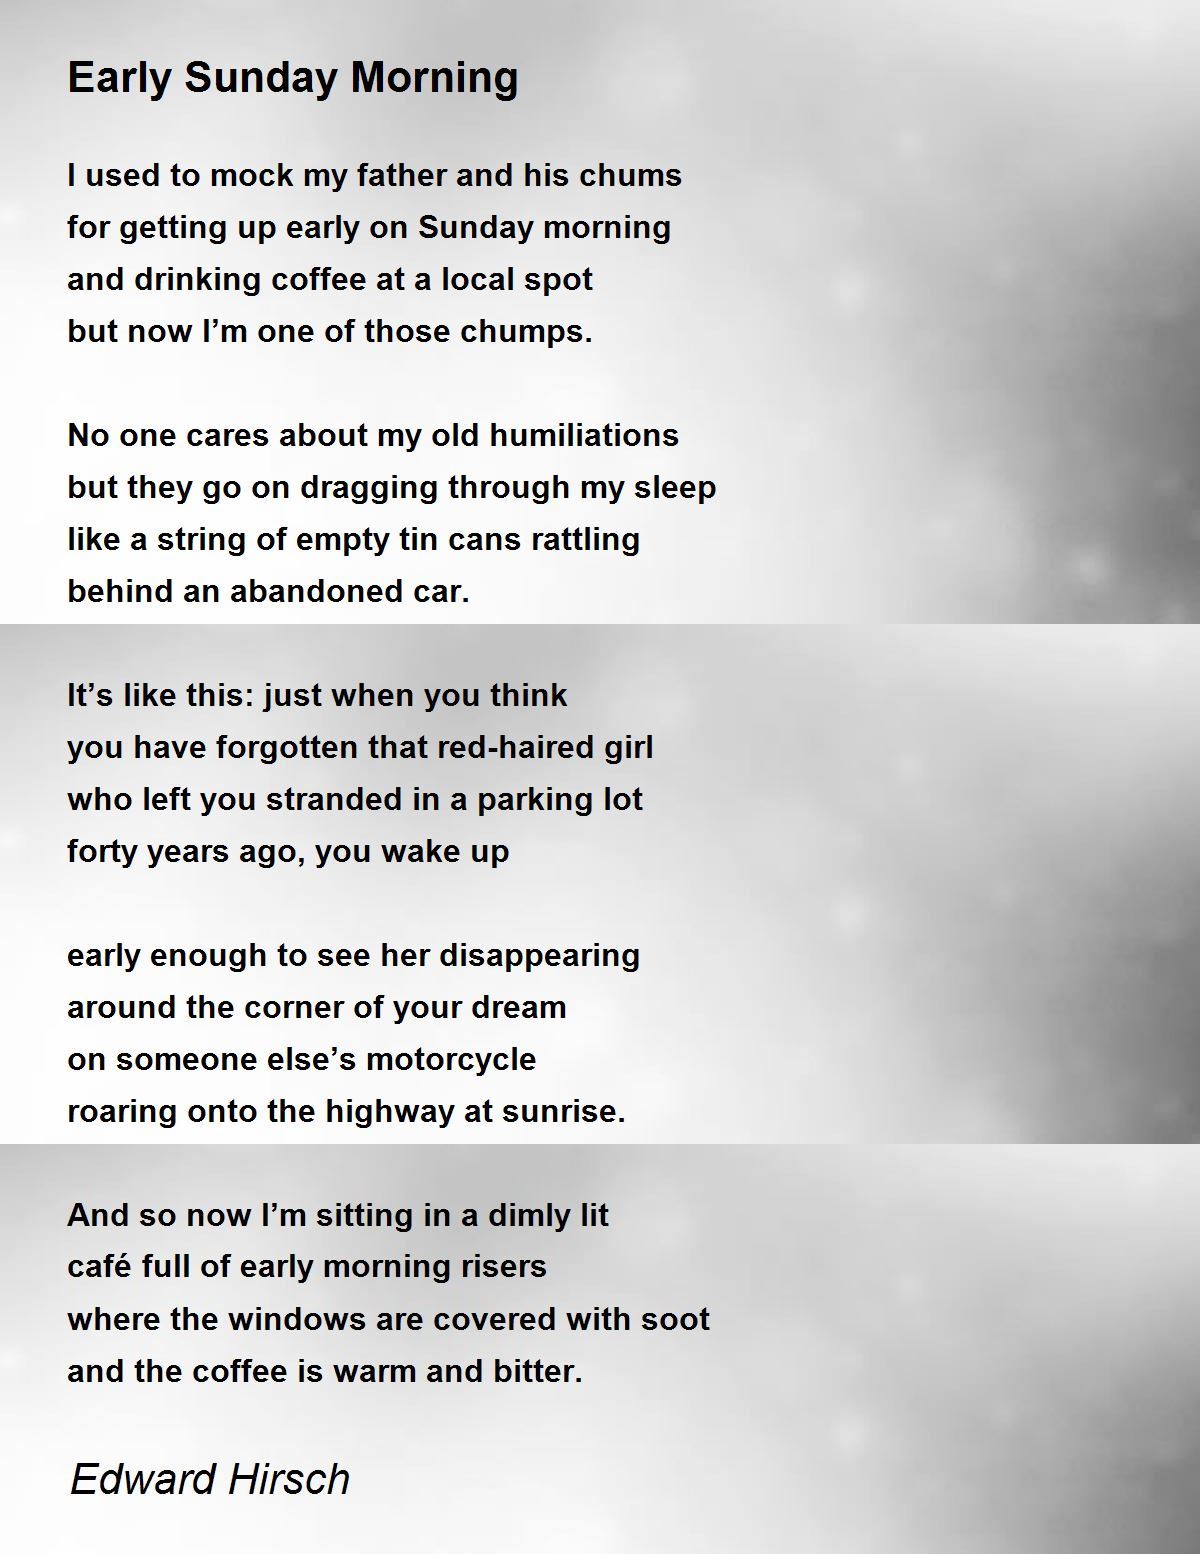 Early Sunday Morning - Early Sunday Morning Poem by Edward Hirsch